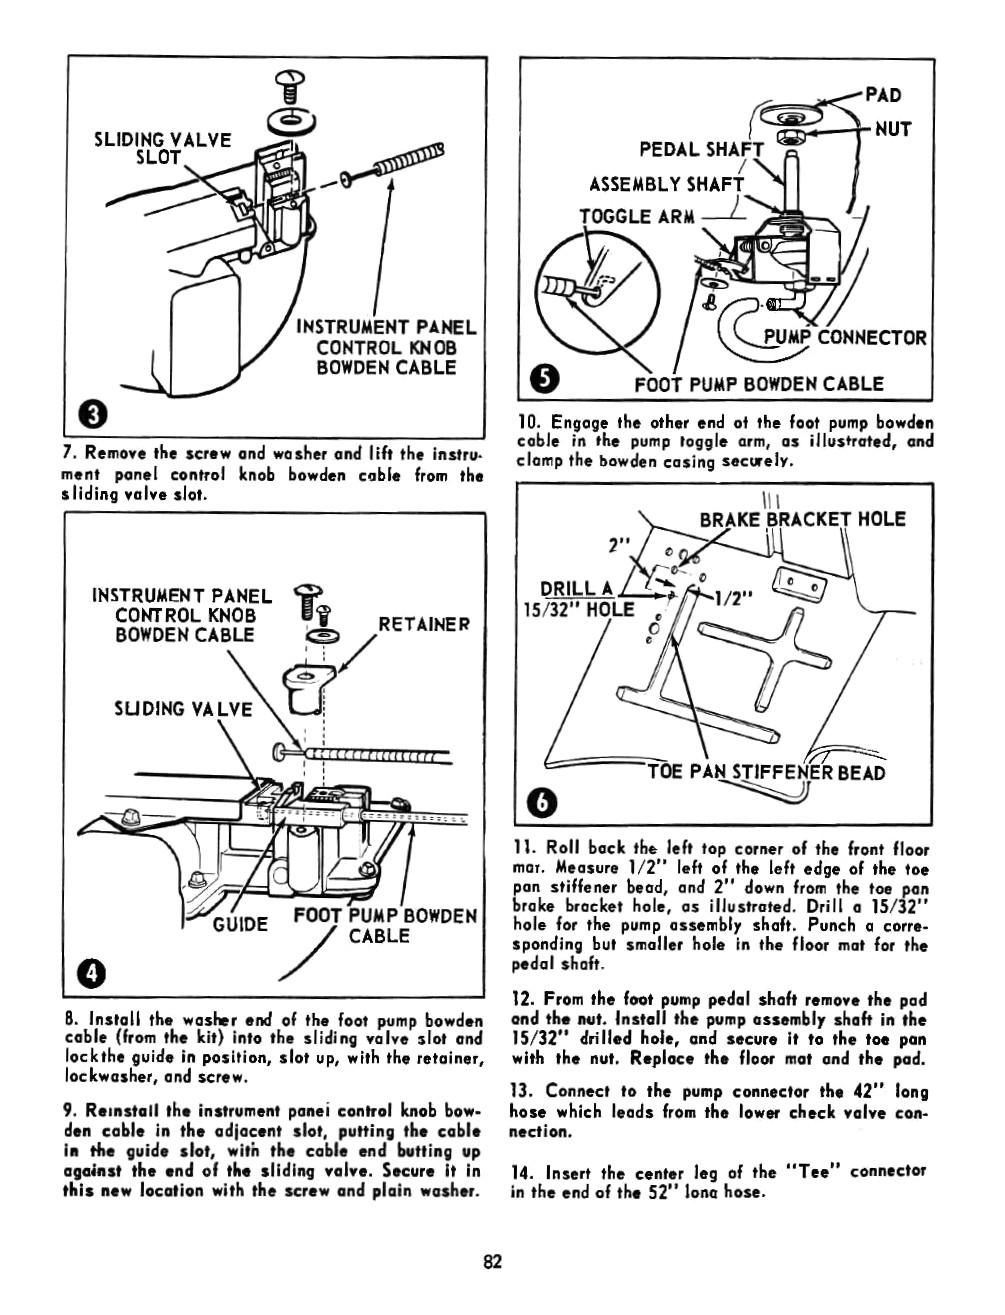 1955_Chevrolet_Acc_Manual-82